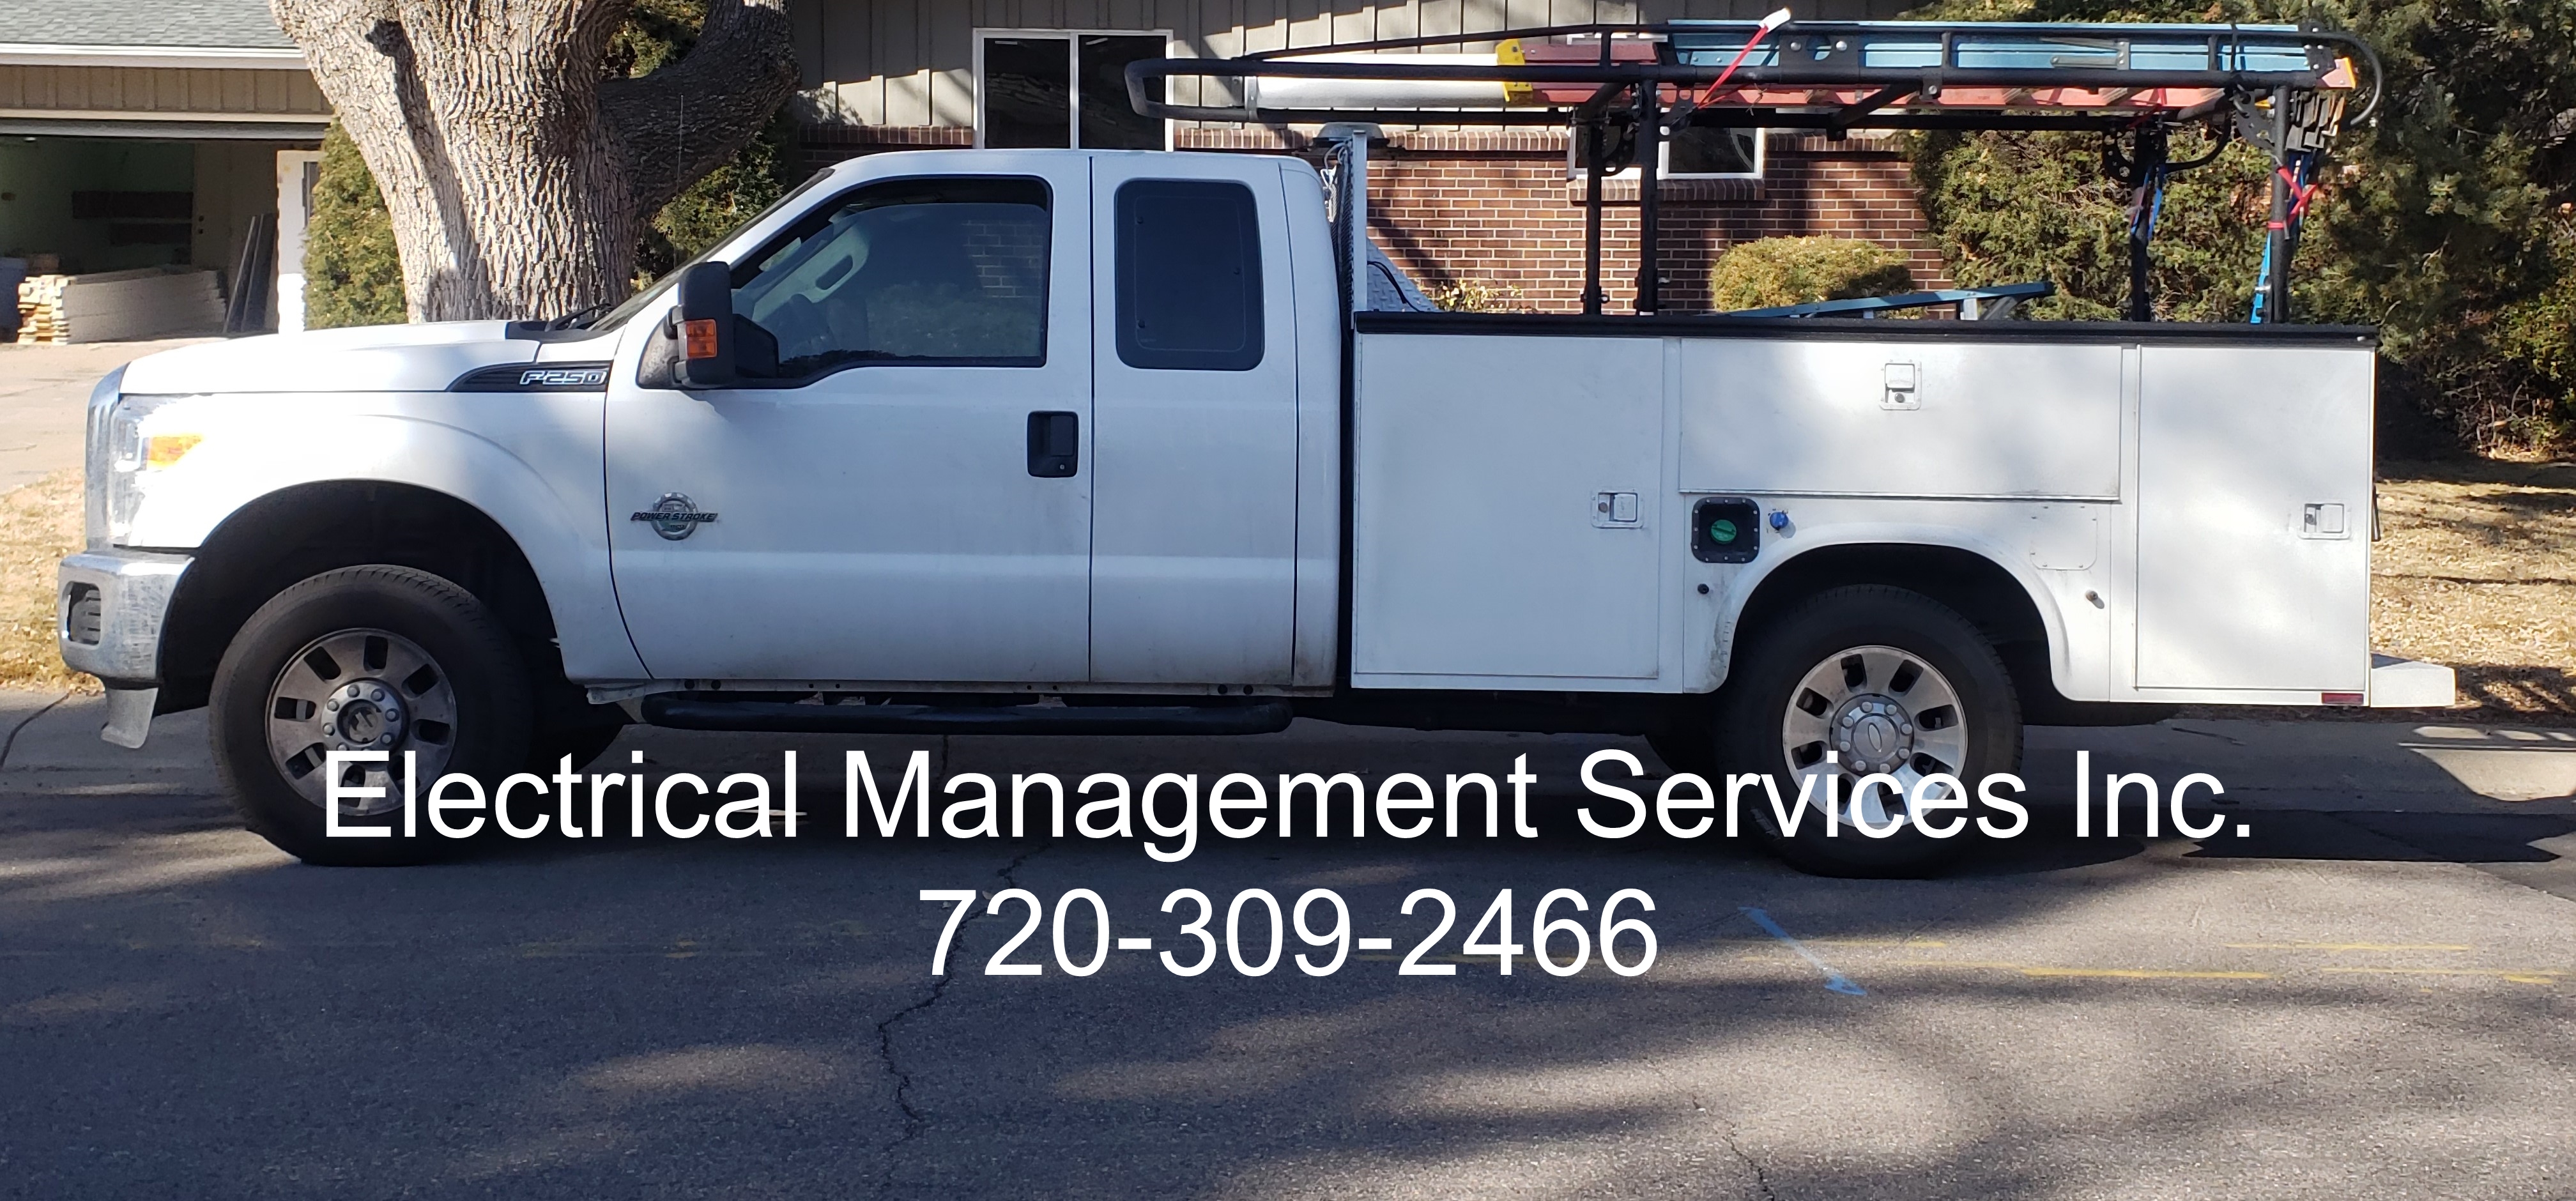 Electrical Management Services, Inc. Logo